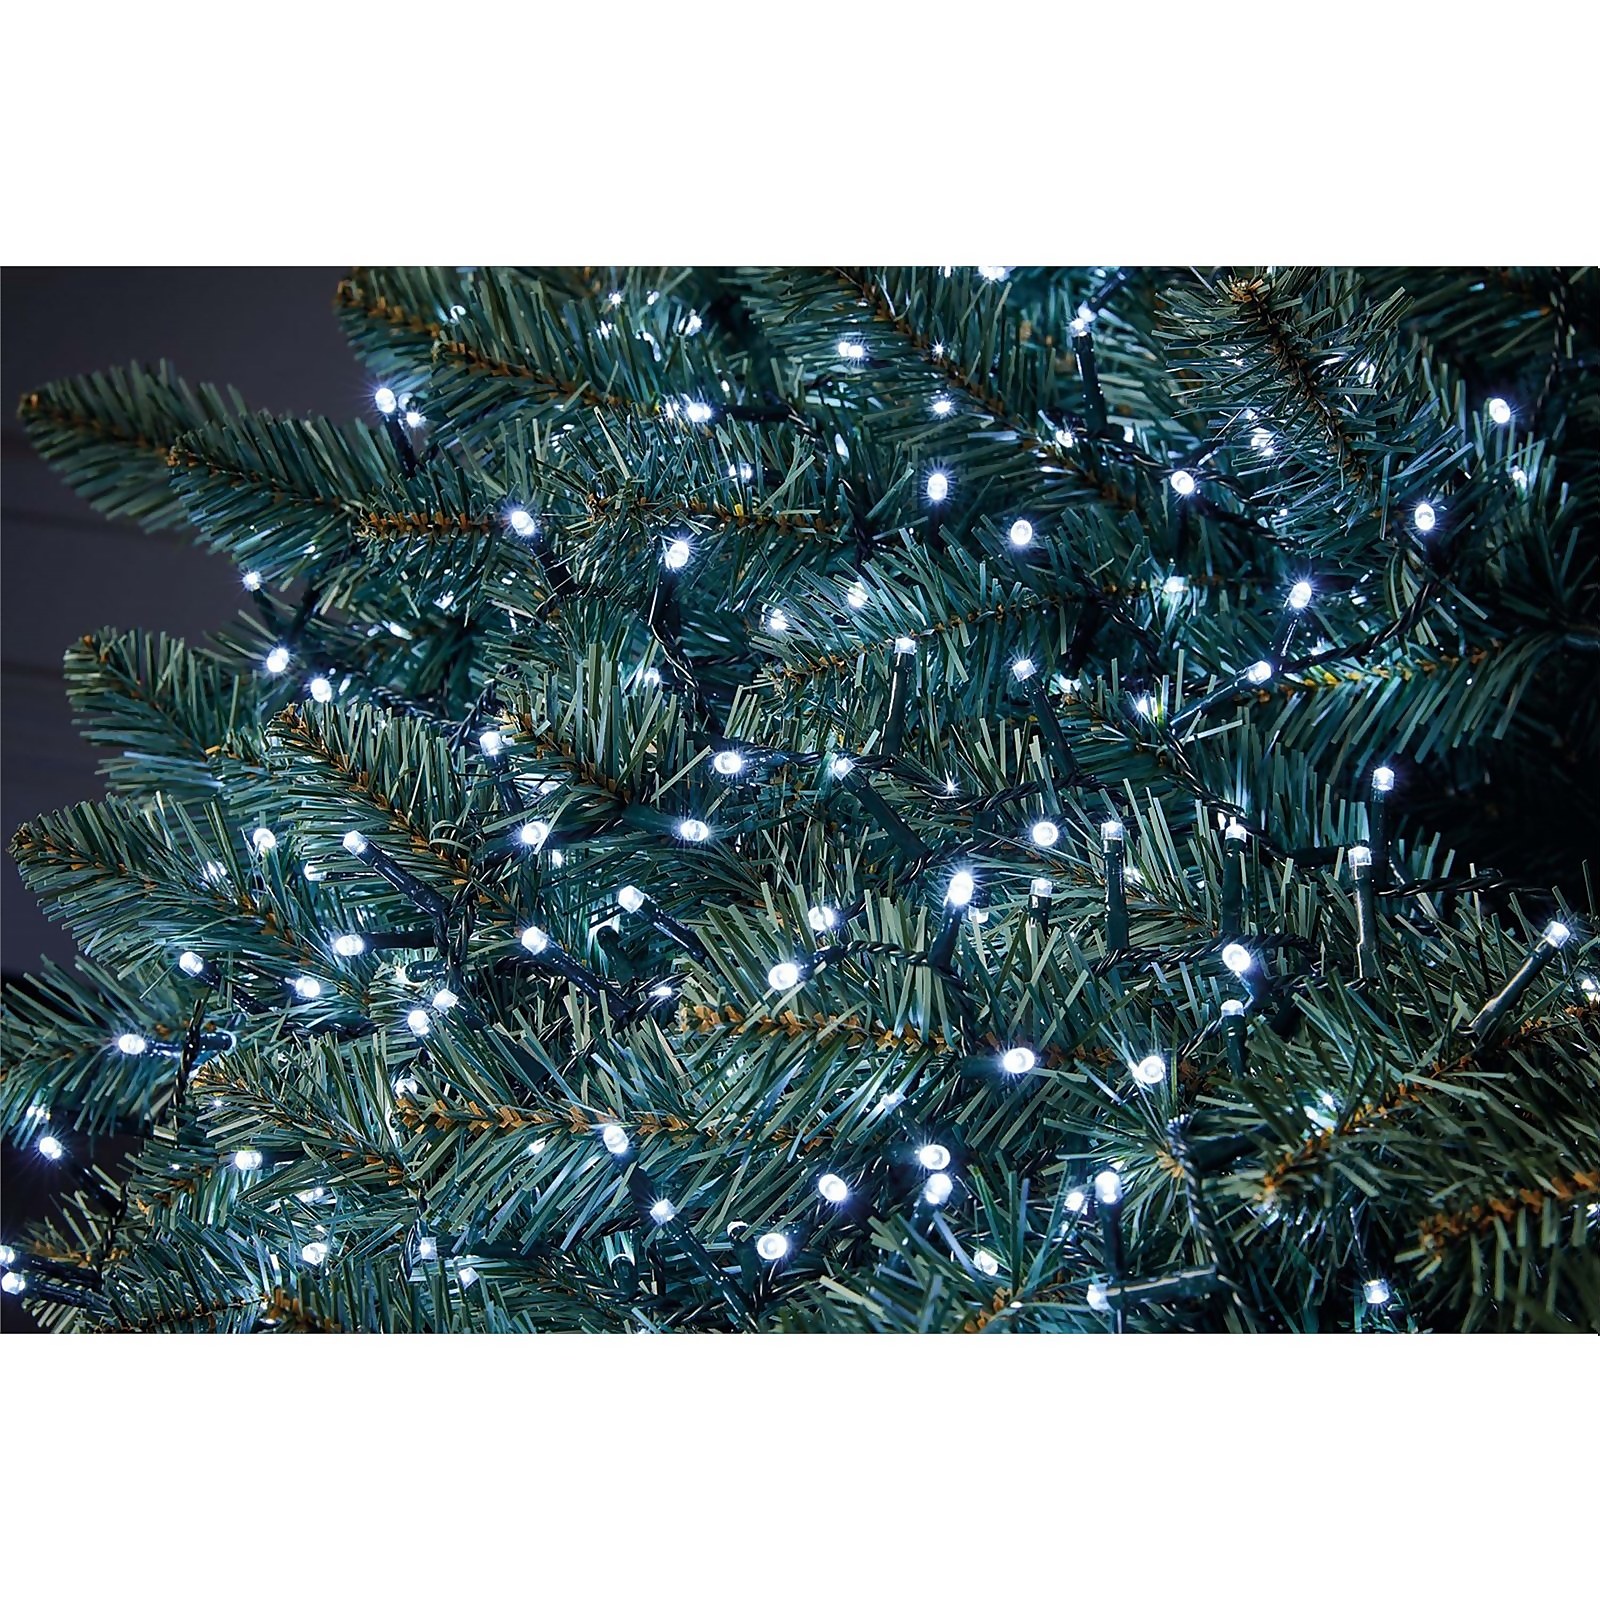 Photo of 600 Led String Christmas Tree Lights - Bright White